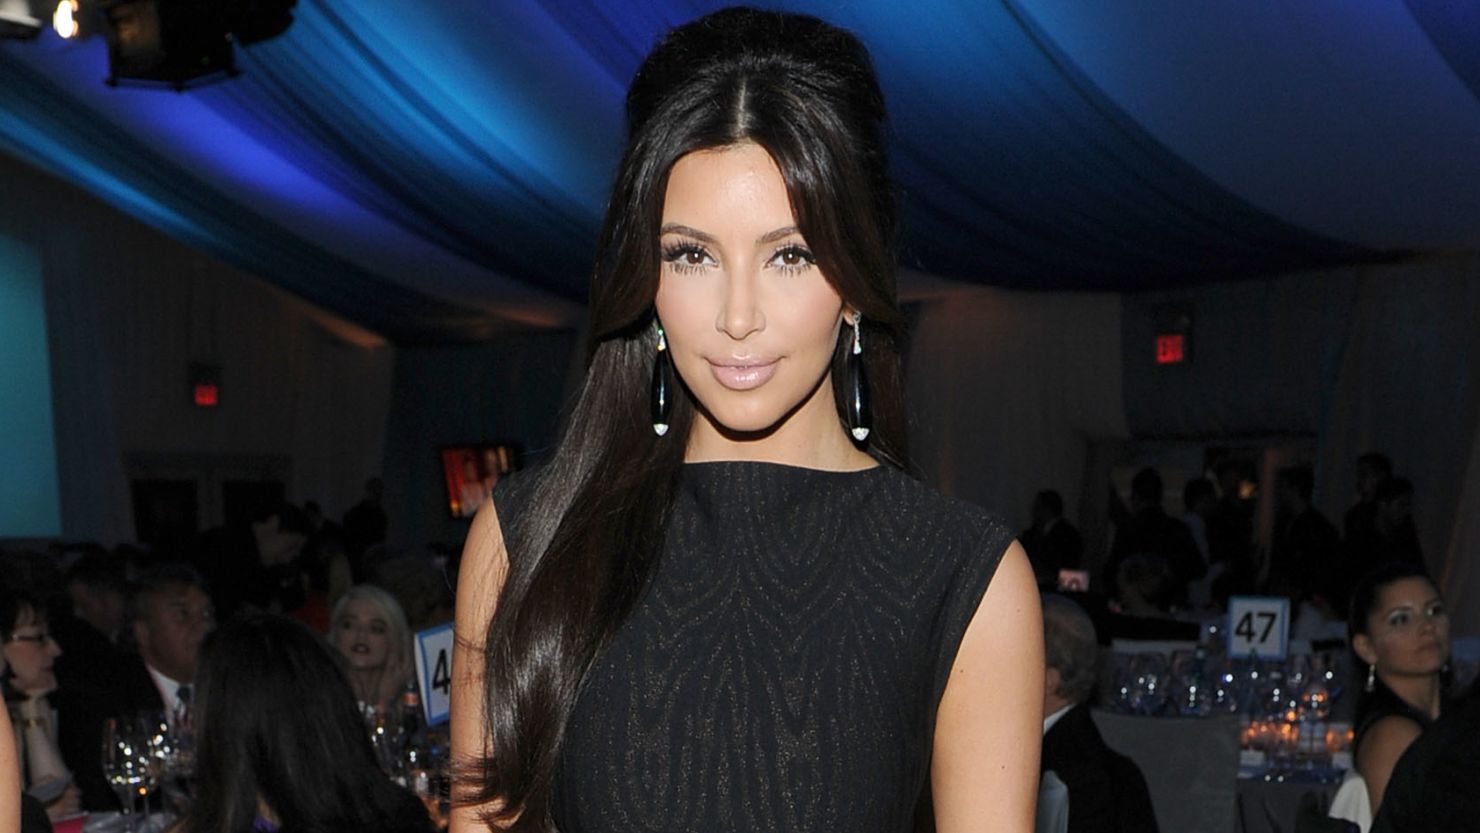 Reality star and entrepreneur Kim Kardashian has designs on political office.